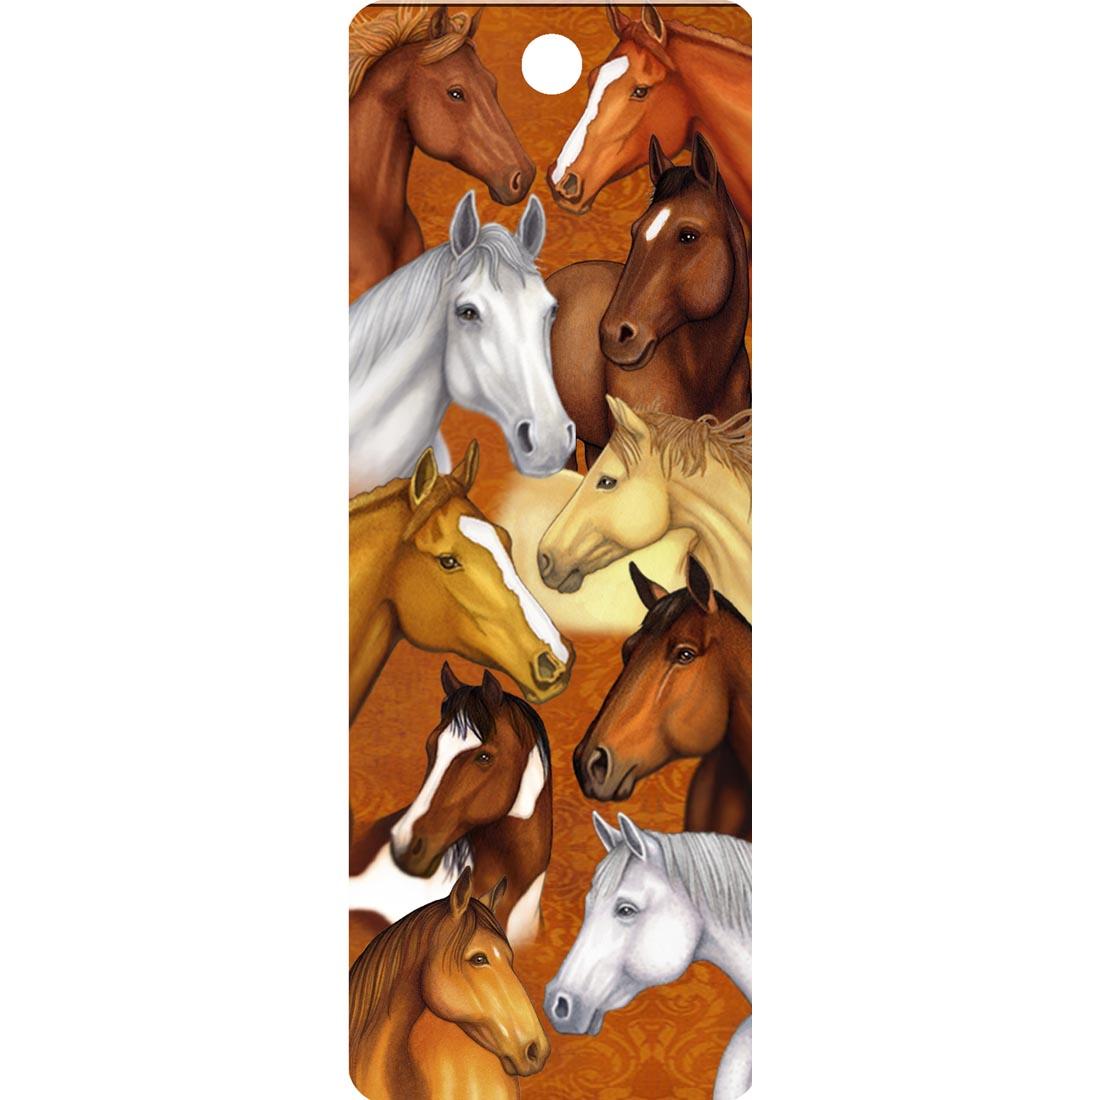 Horse Fever 3D Bookmark